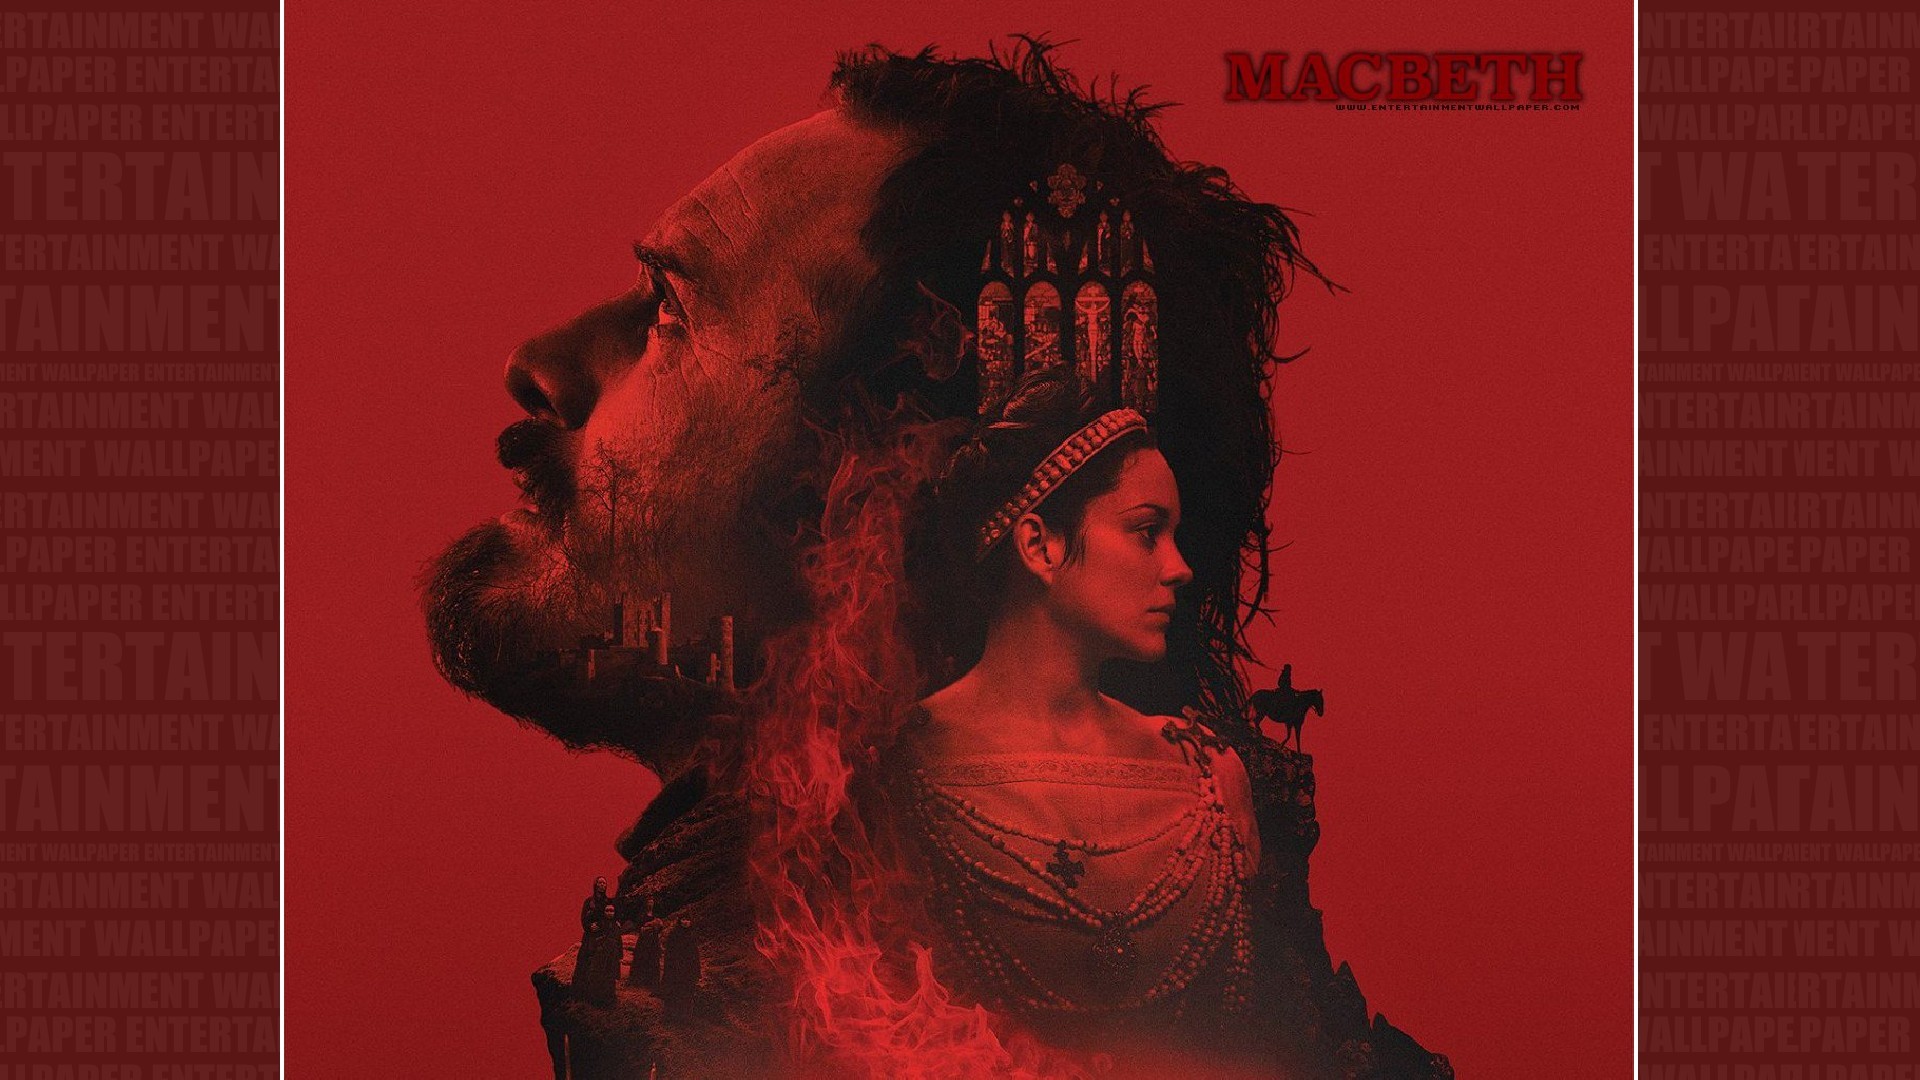 1920x1080 Macbeth Wallpaper - Original size, download now.